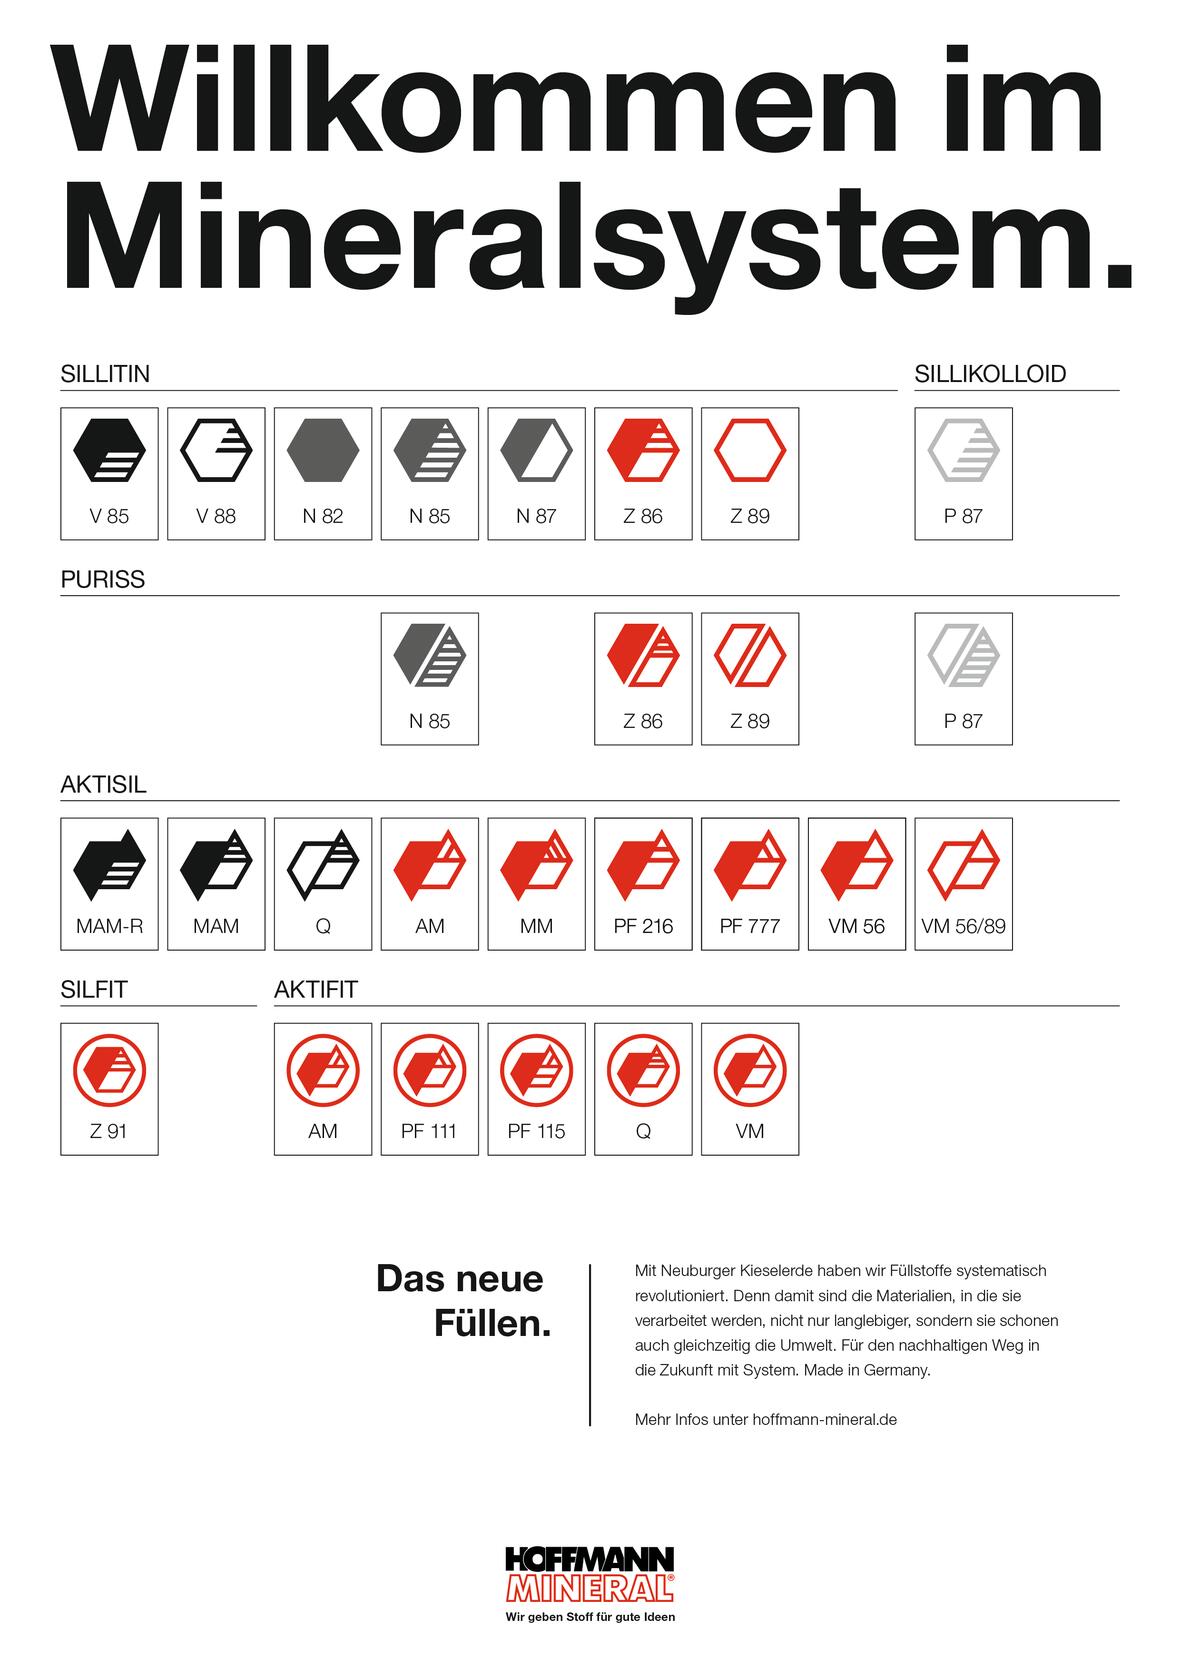 Mineralsystem